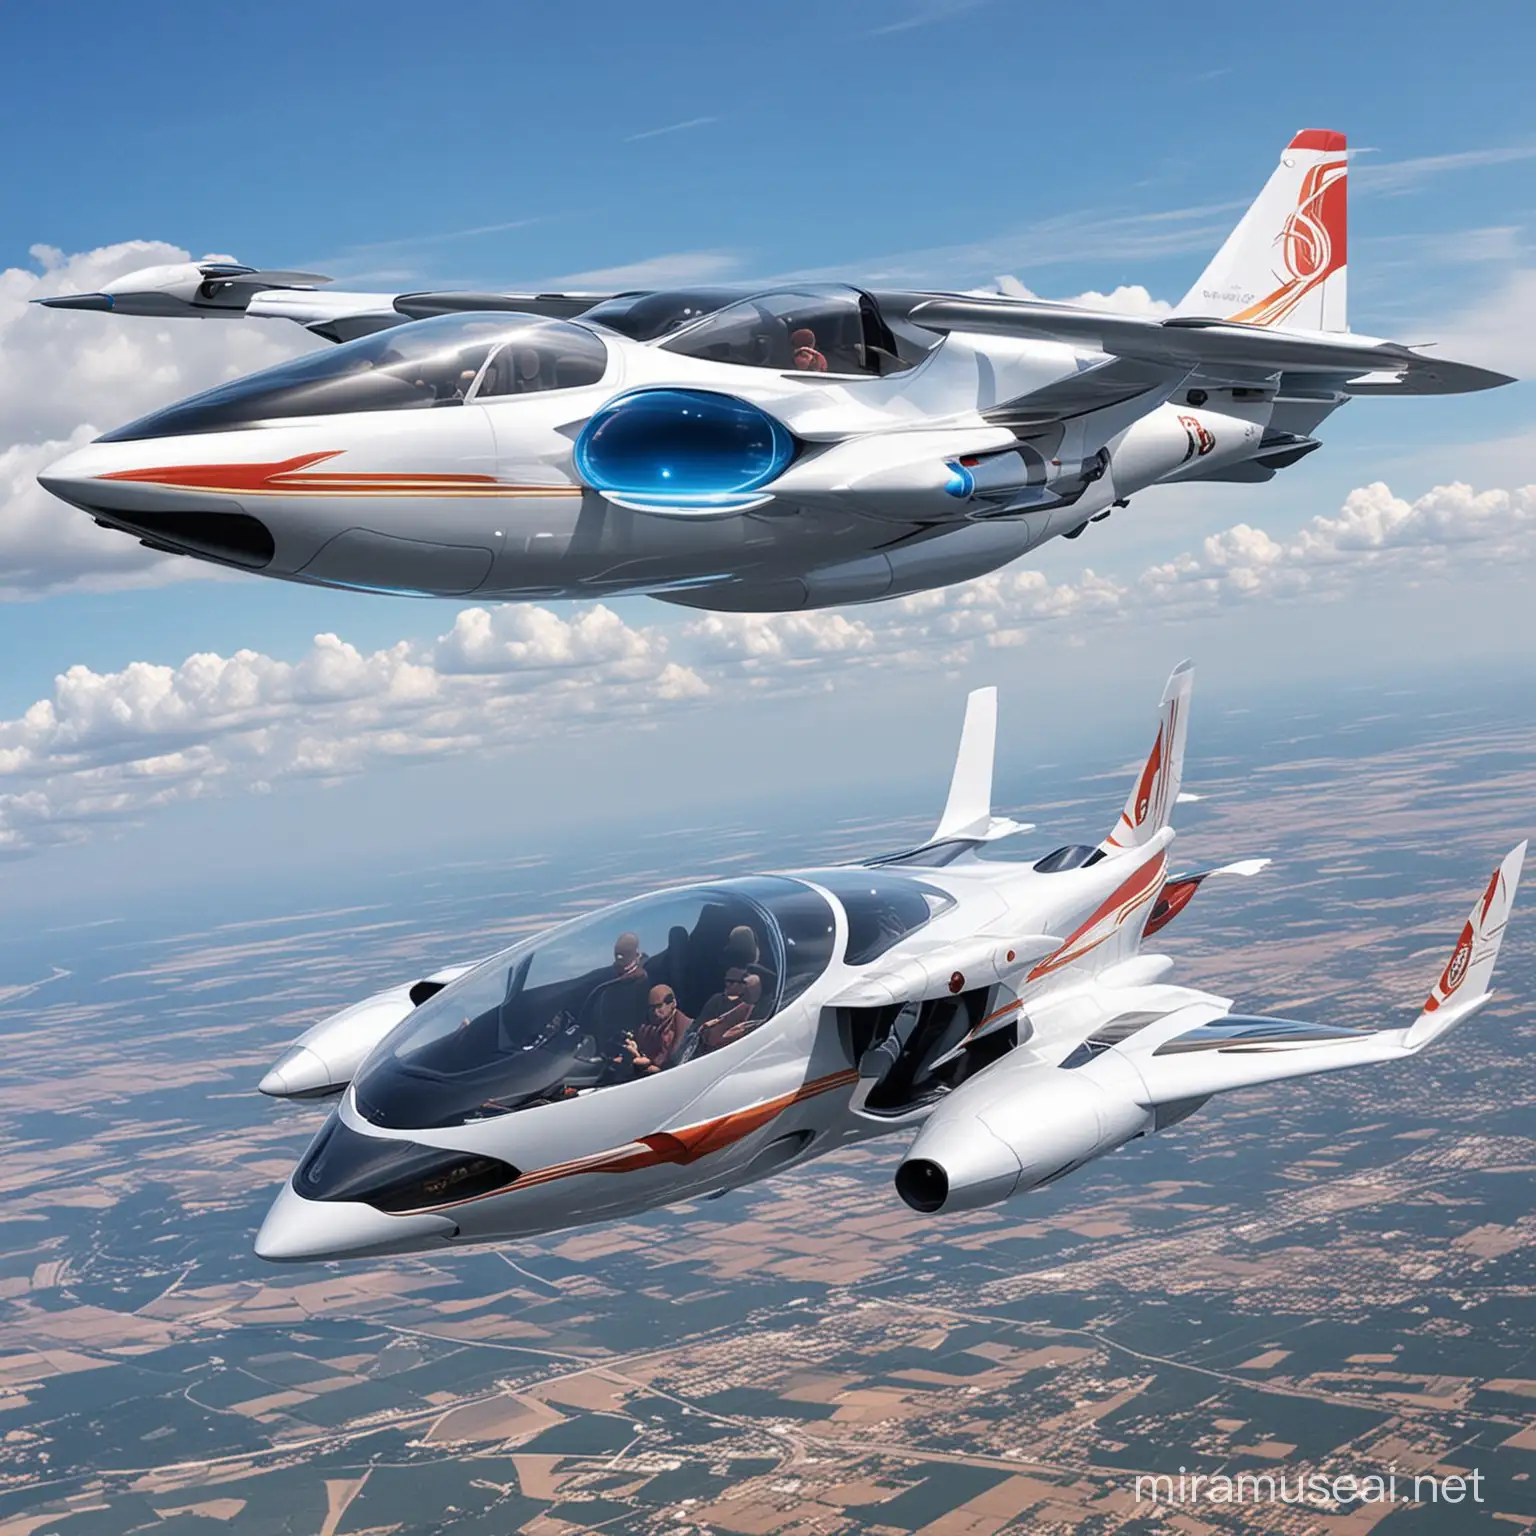 Futuristic Flying Cars Transforming Urban Transport